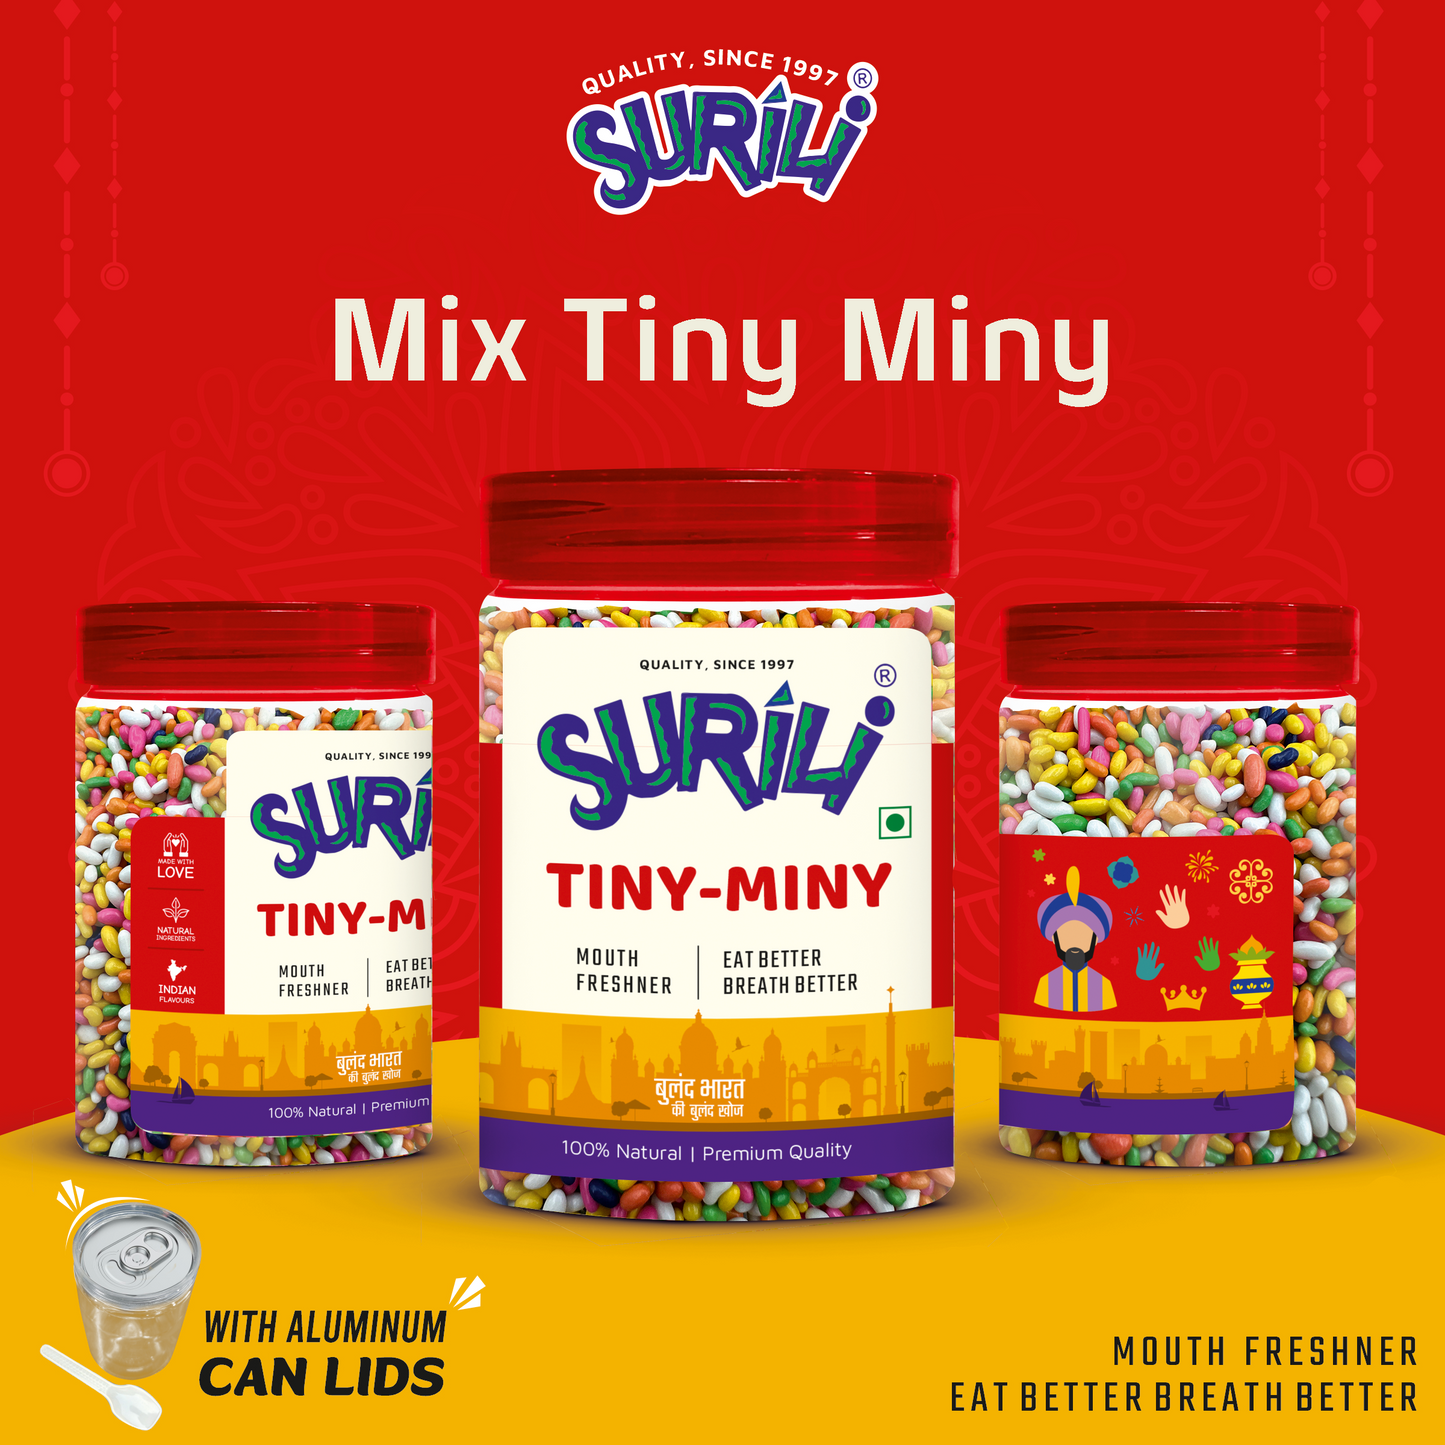 Mix Tiny miny